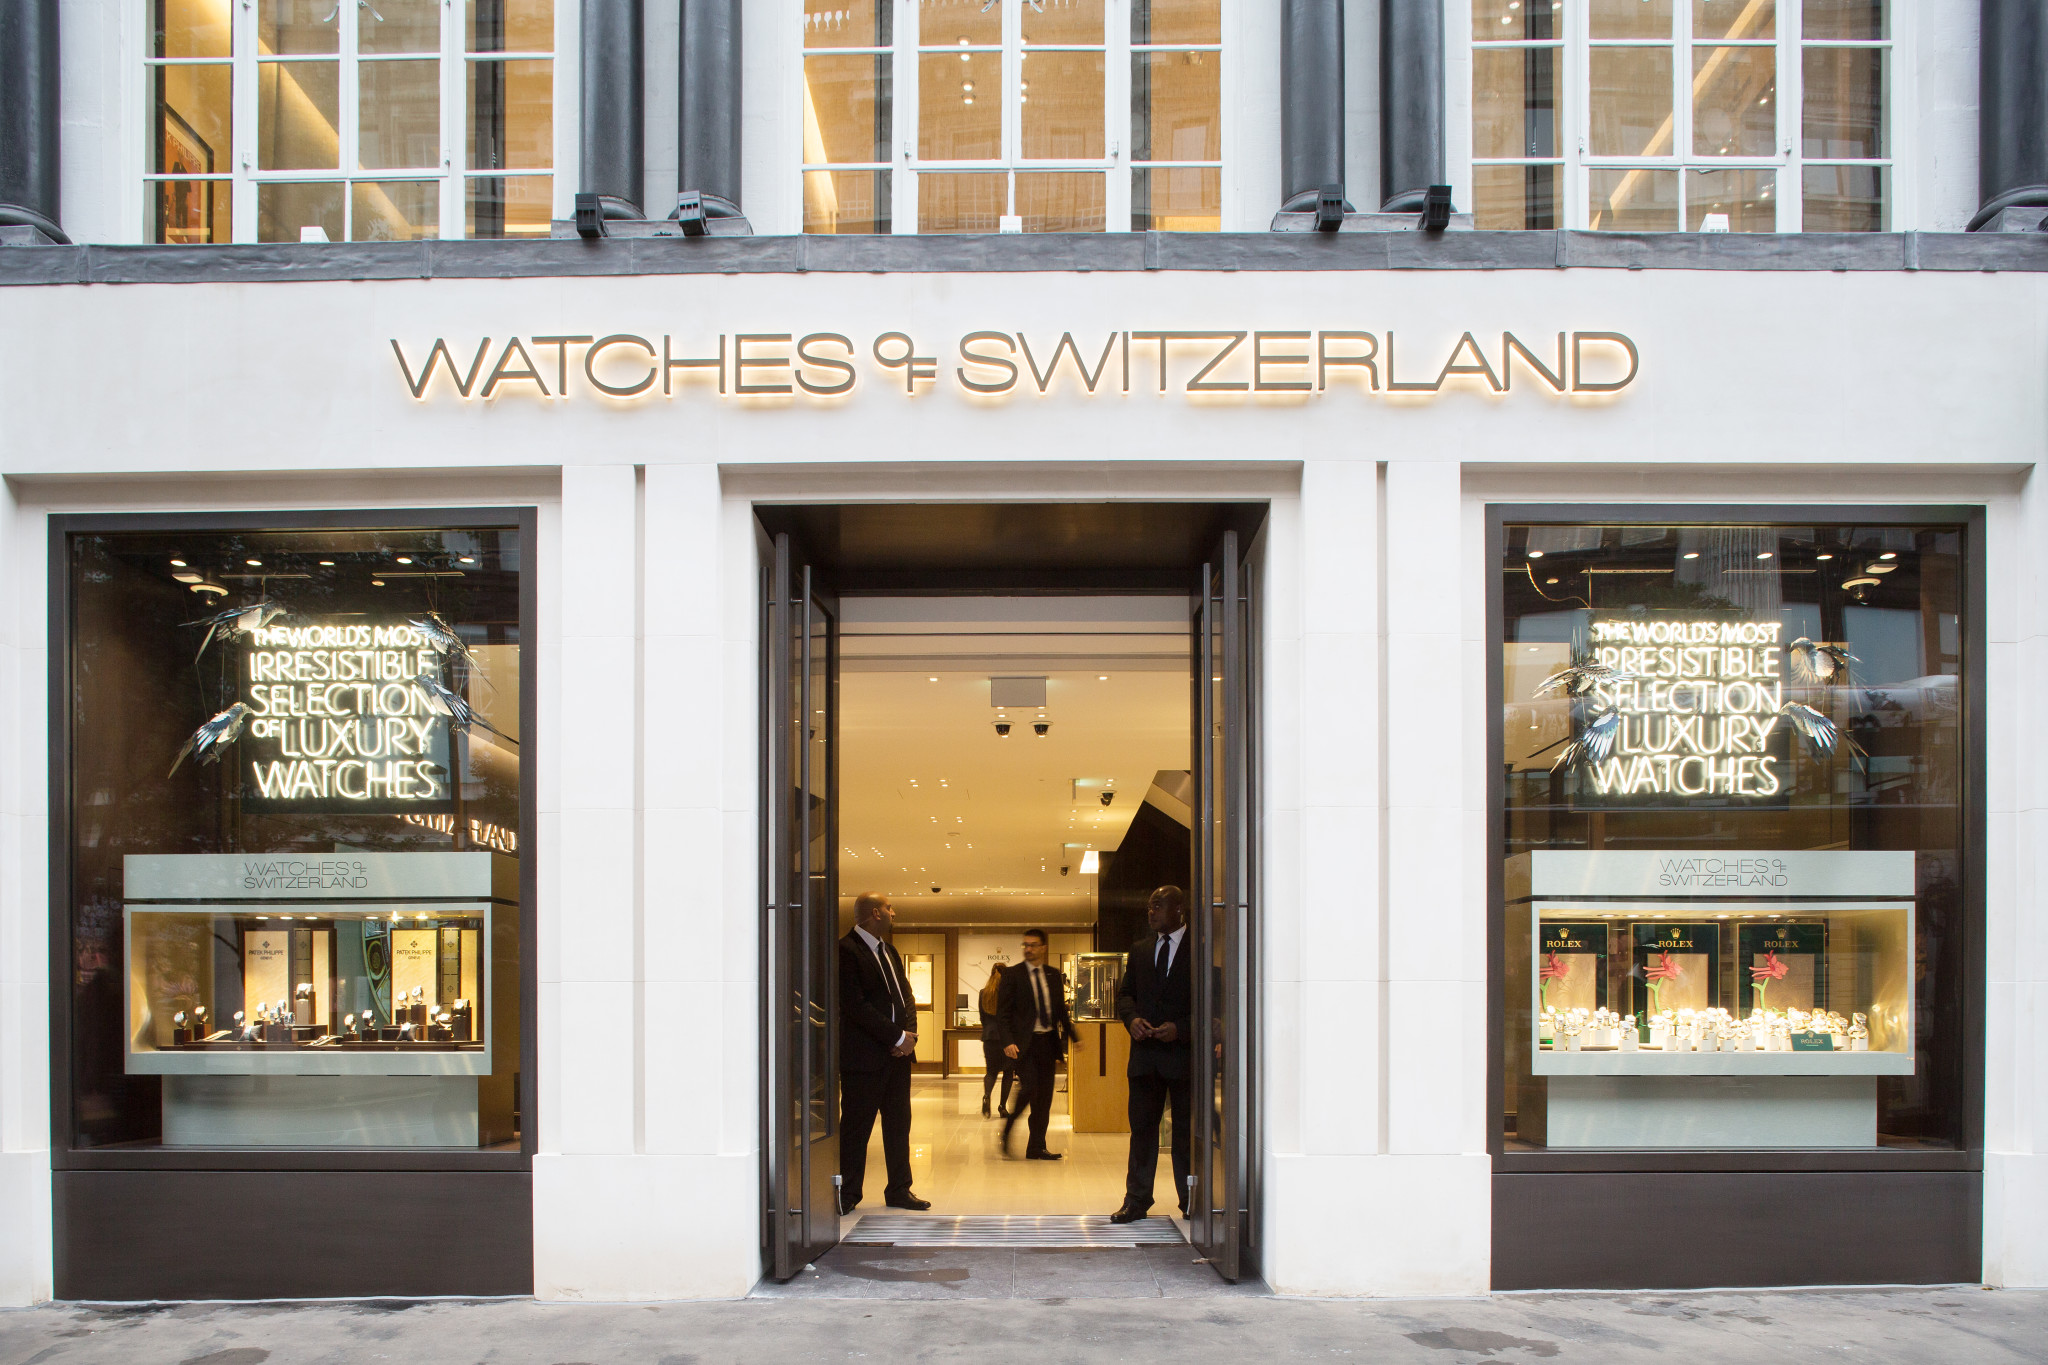 Watches of switzerland